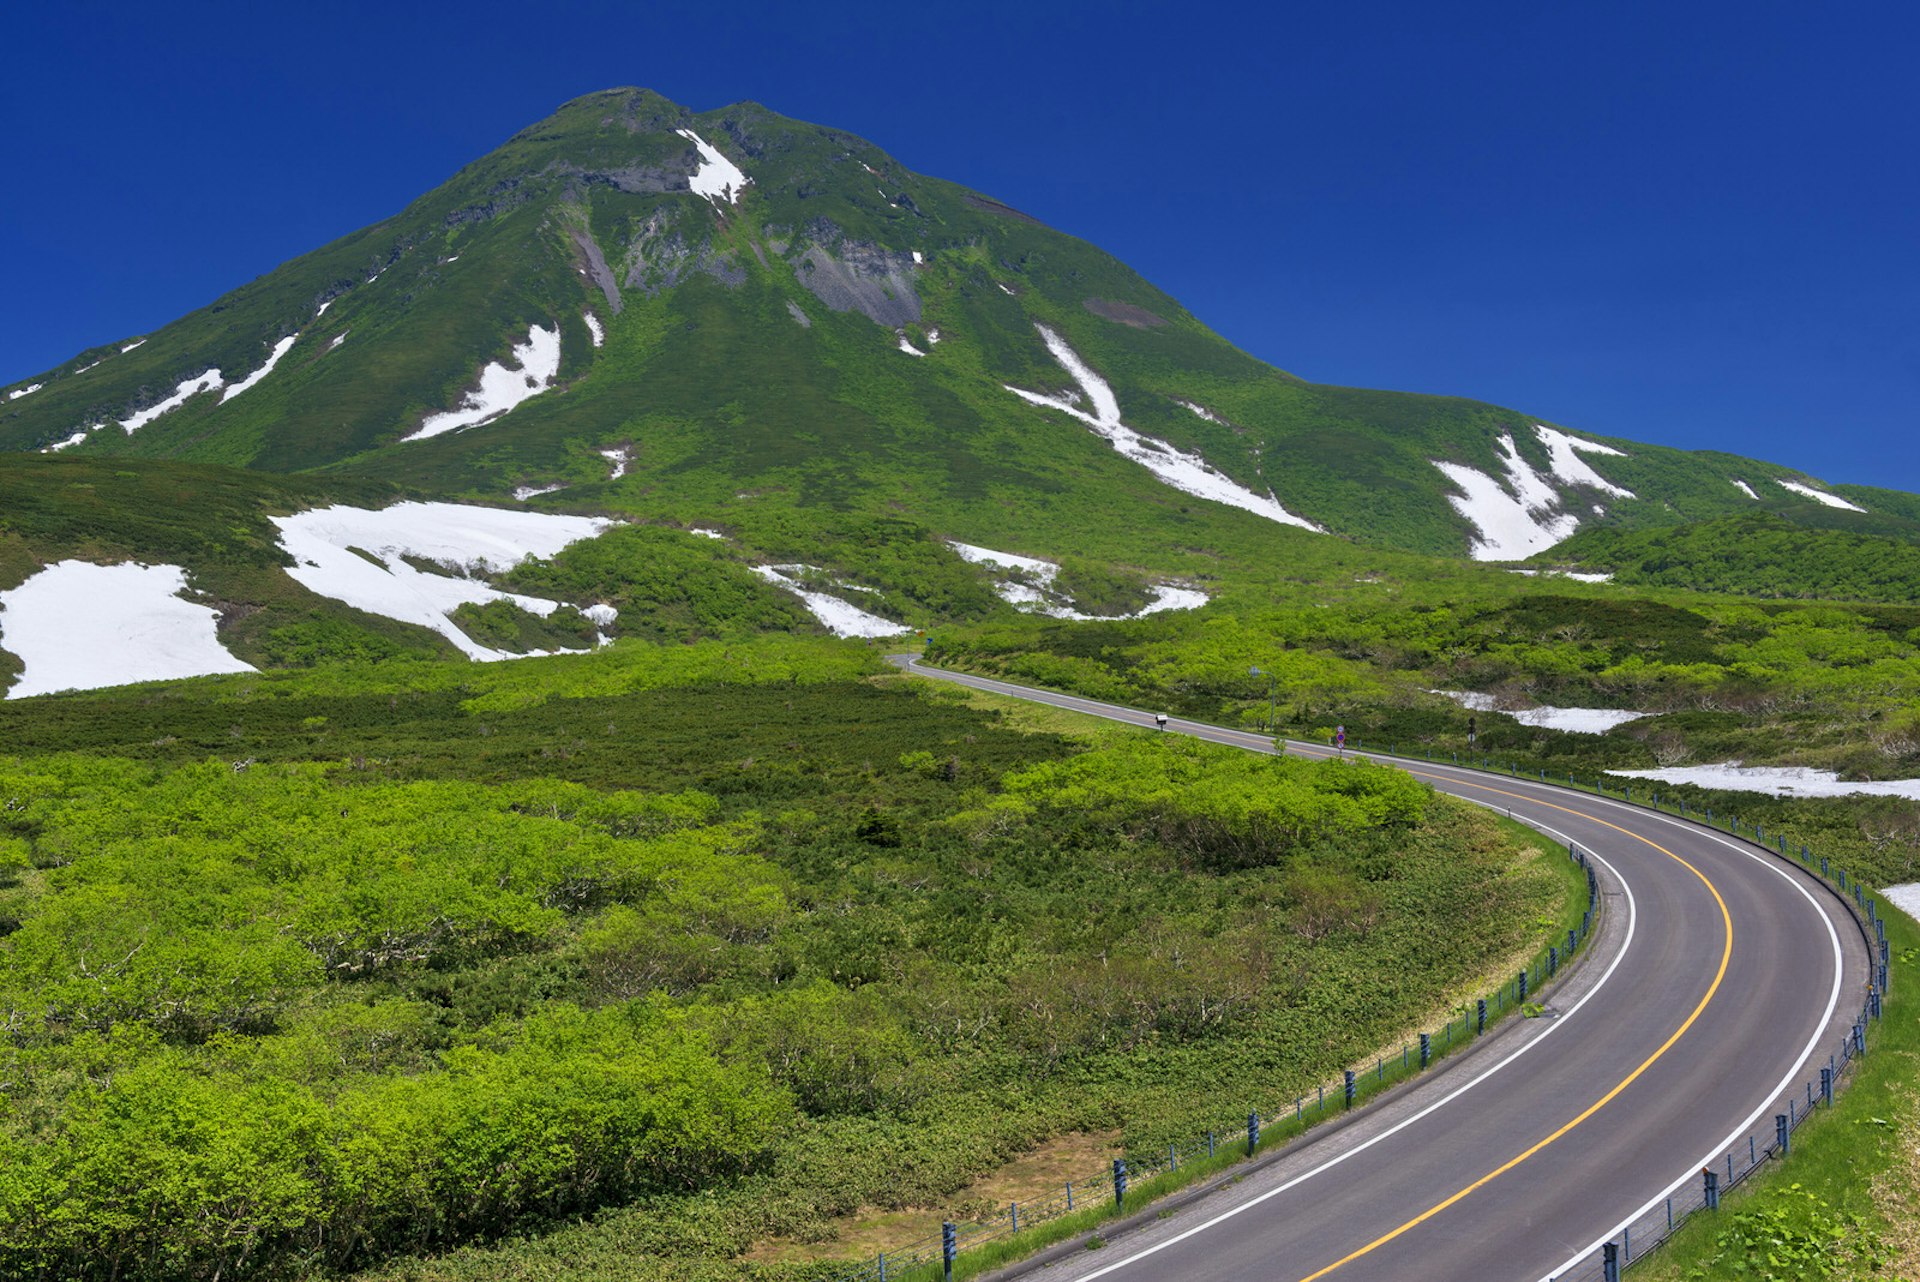 A road leads through a lush green landscape towards mountain Rausu-dake